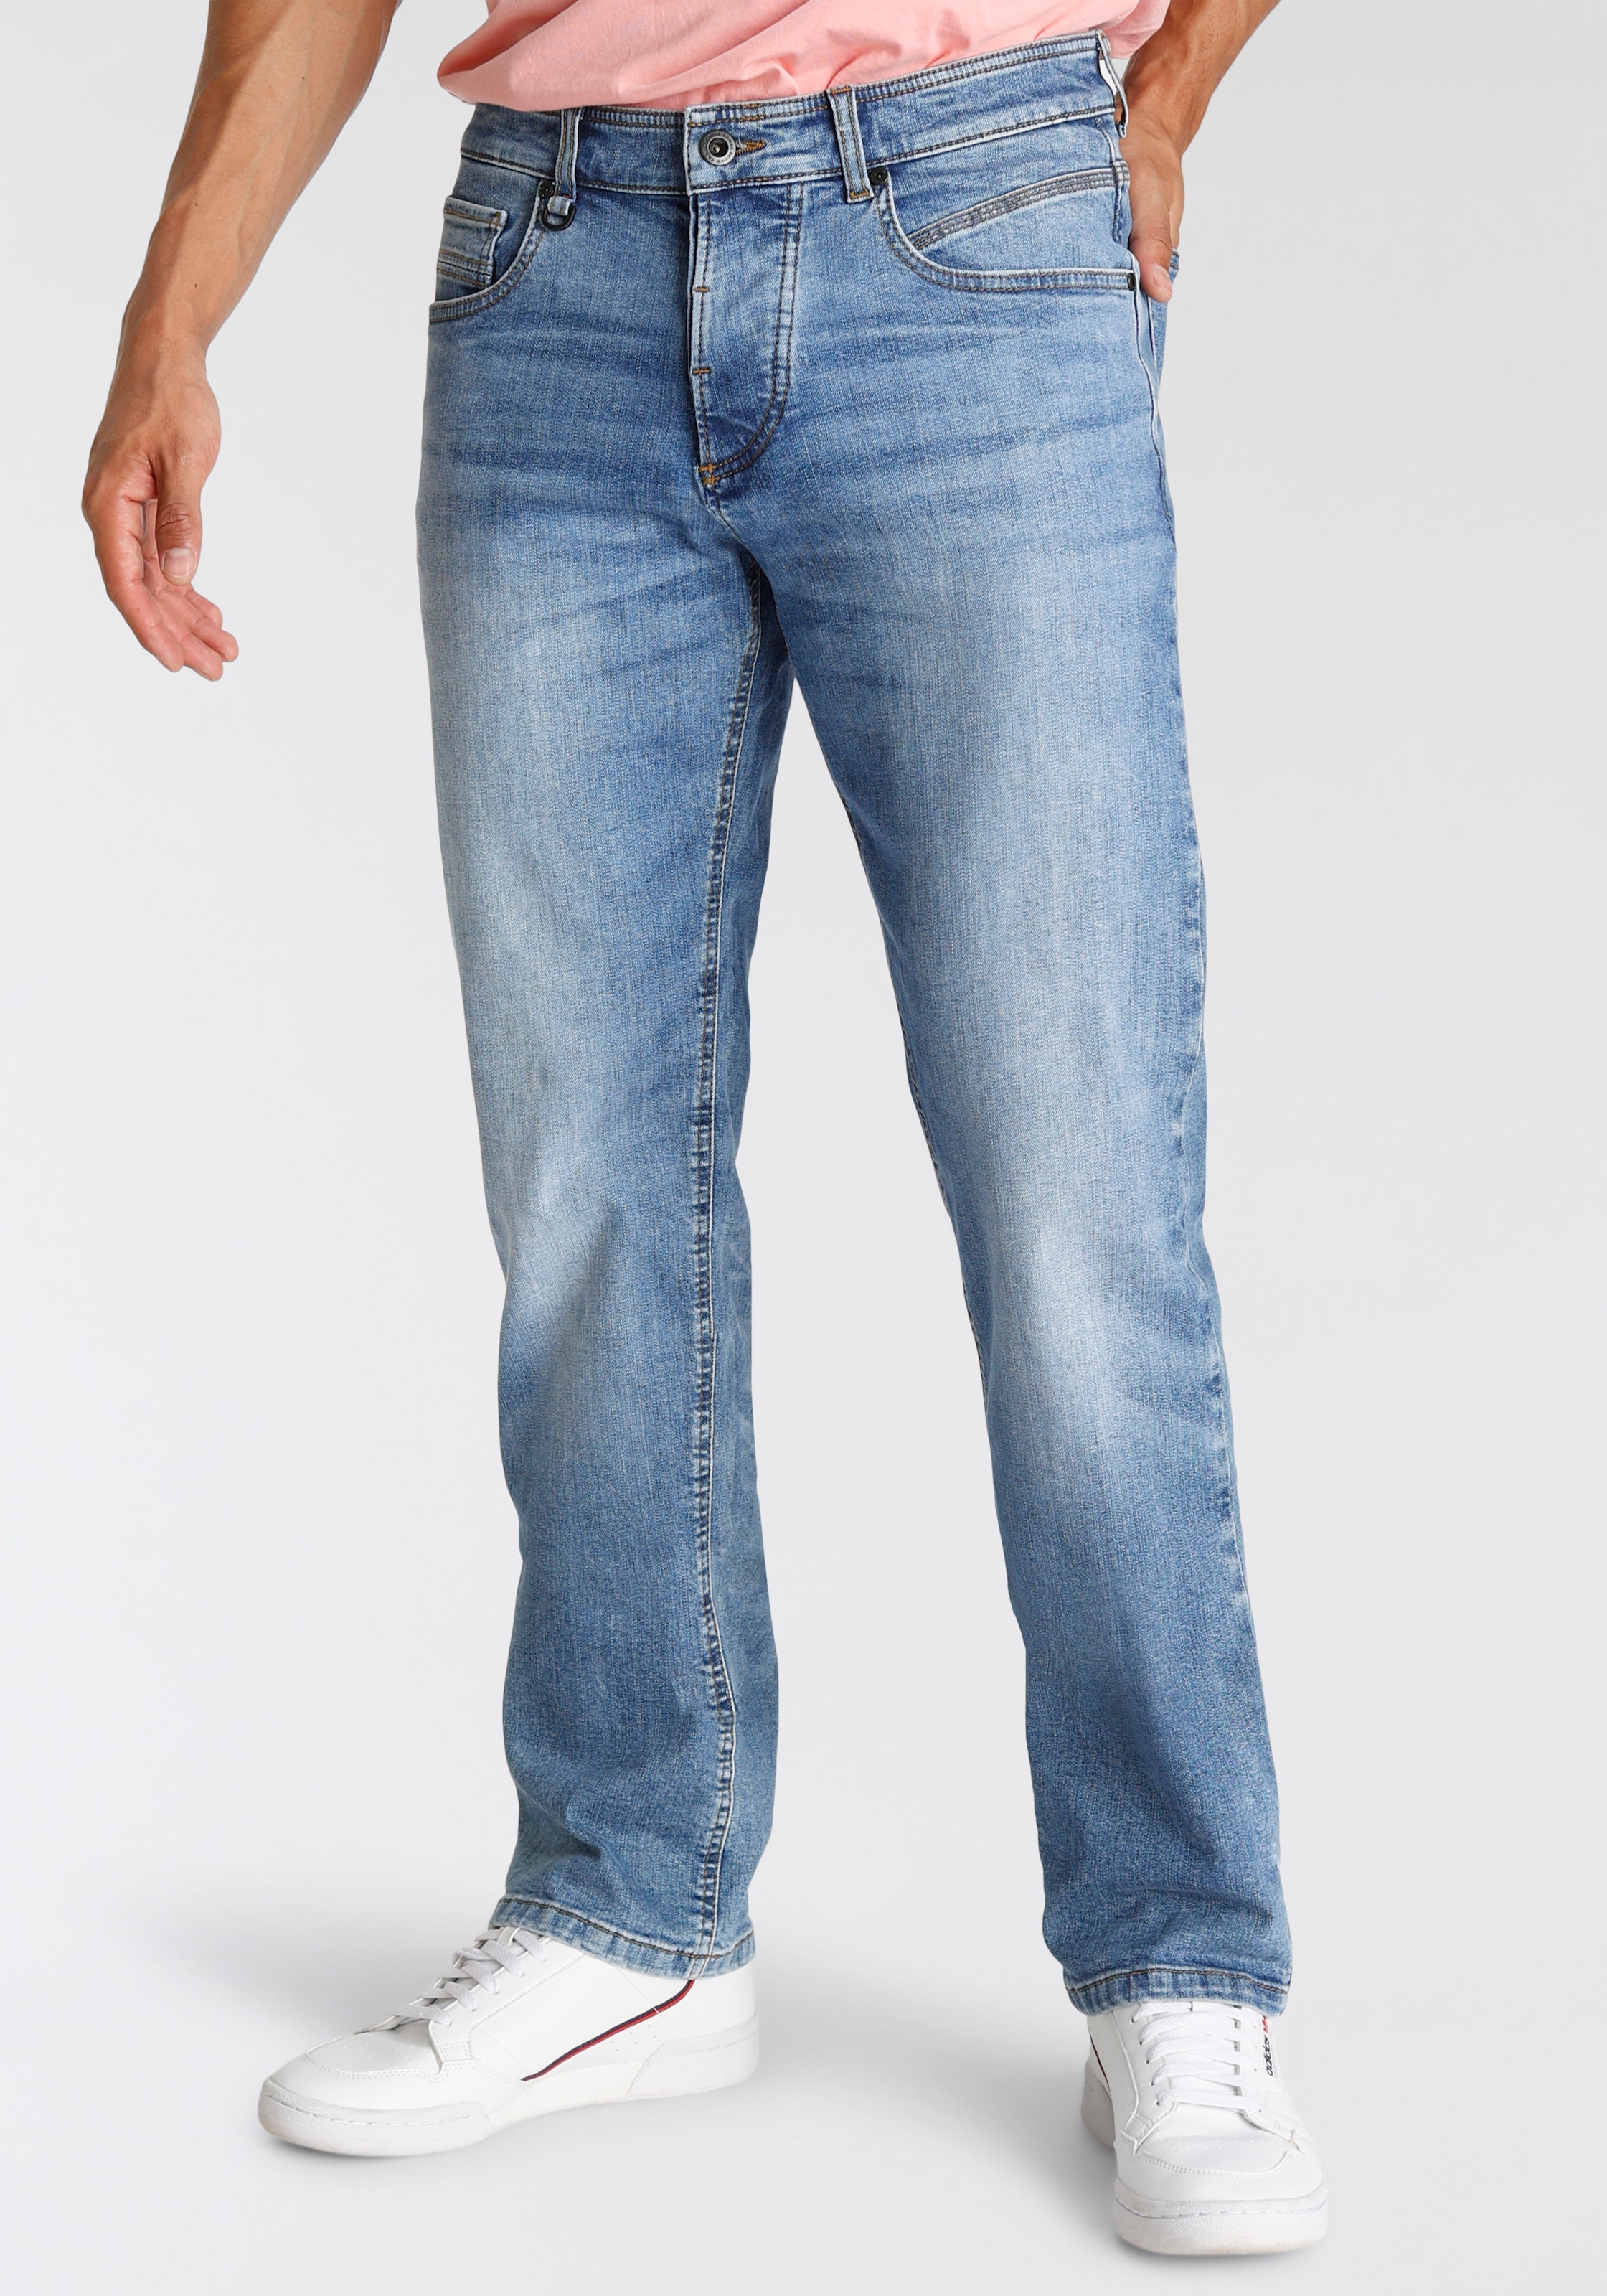 »WOODSTOCK« kaufen camel active 5-Pocket-Jeans online